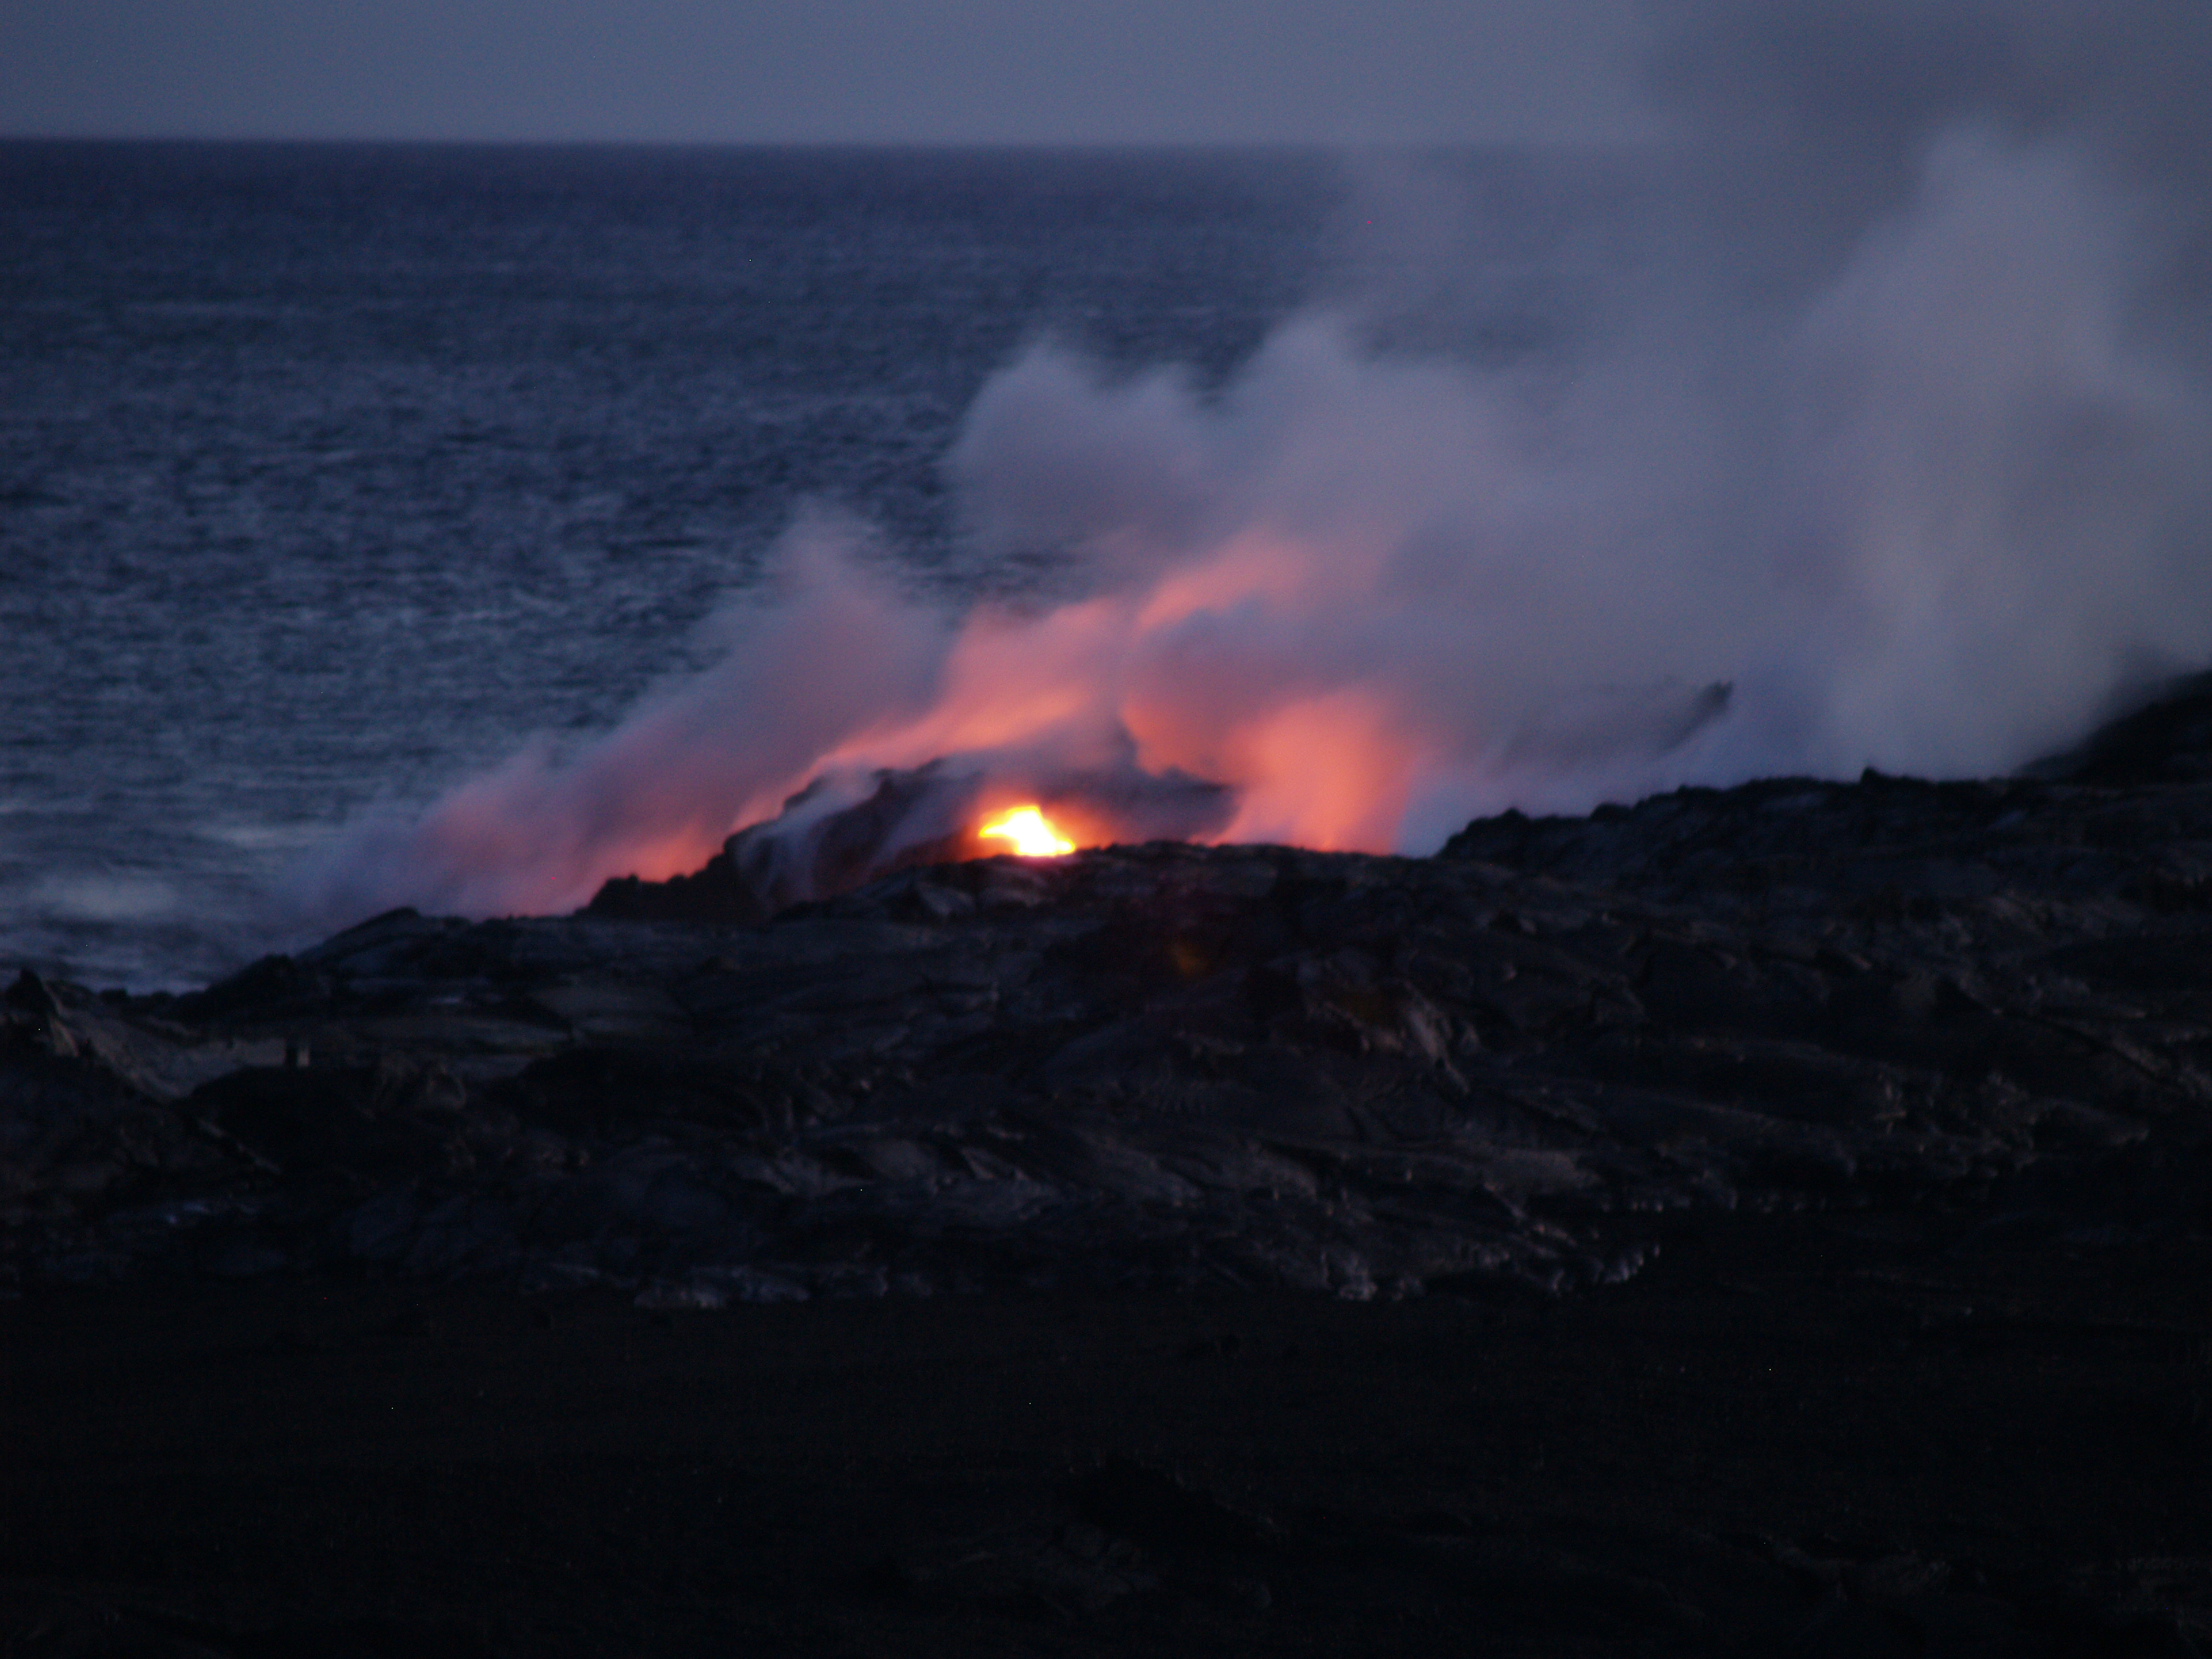 Glowing Lava from Kilauea Volcano Enters the Sea at Waikupanaha on the Big Island of Hawaii: Photograph by Donald B. MacGowan